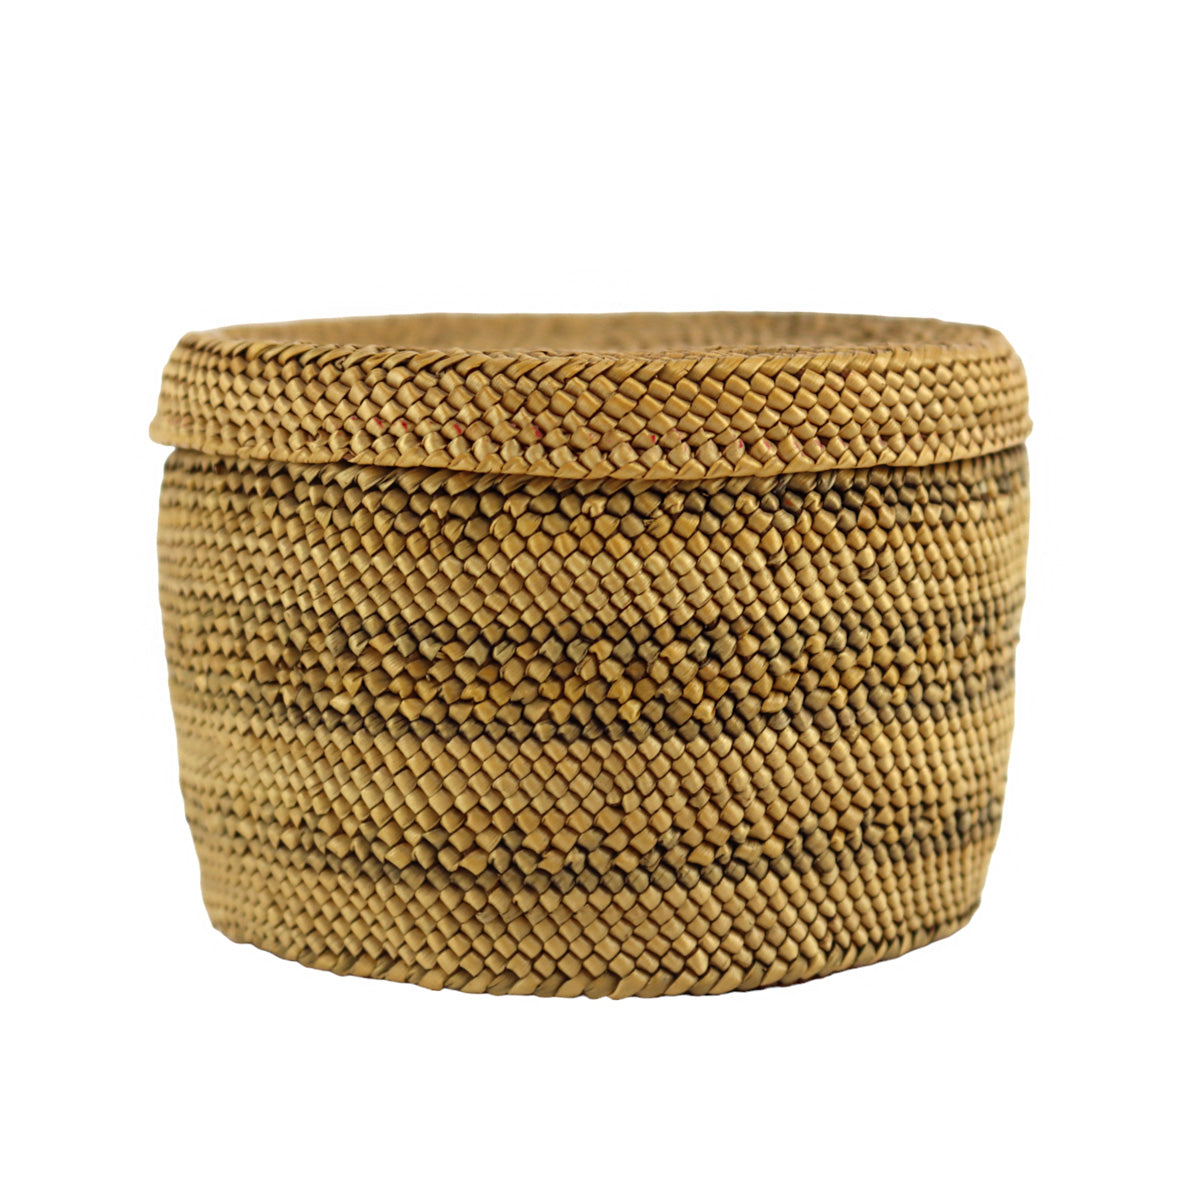 Makah Polychrome Lidded Basket c. Turn of the Century, 2.5" x 3.75" (SK3530)